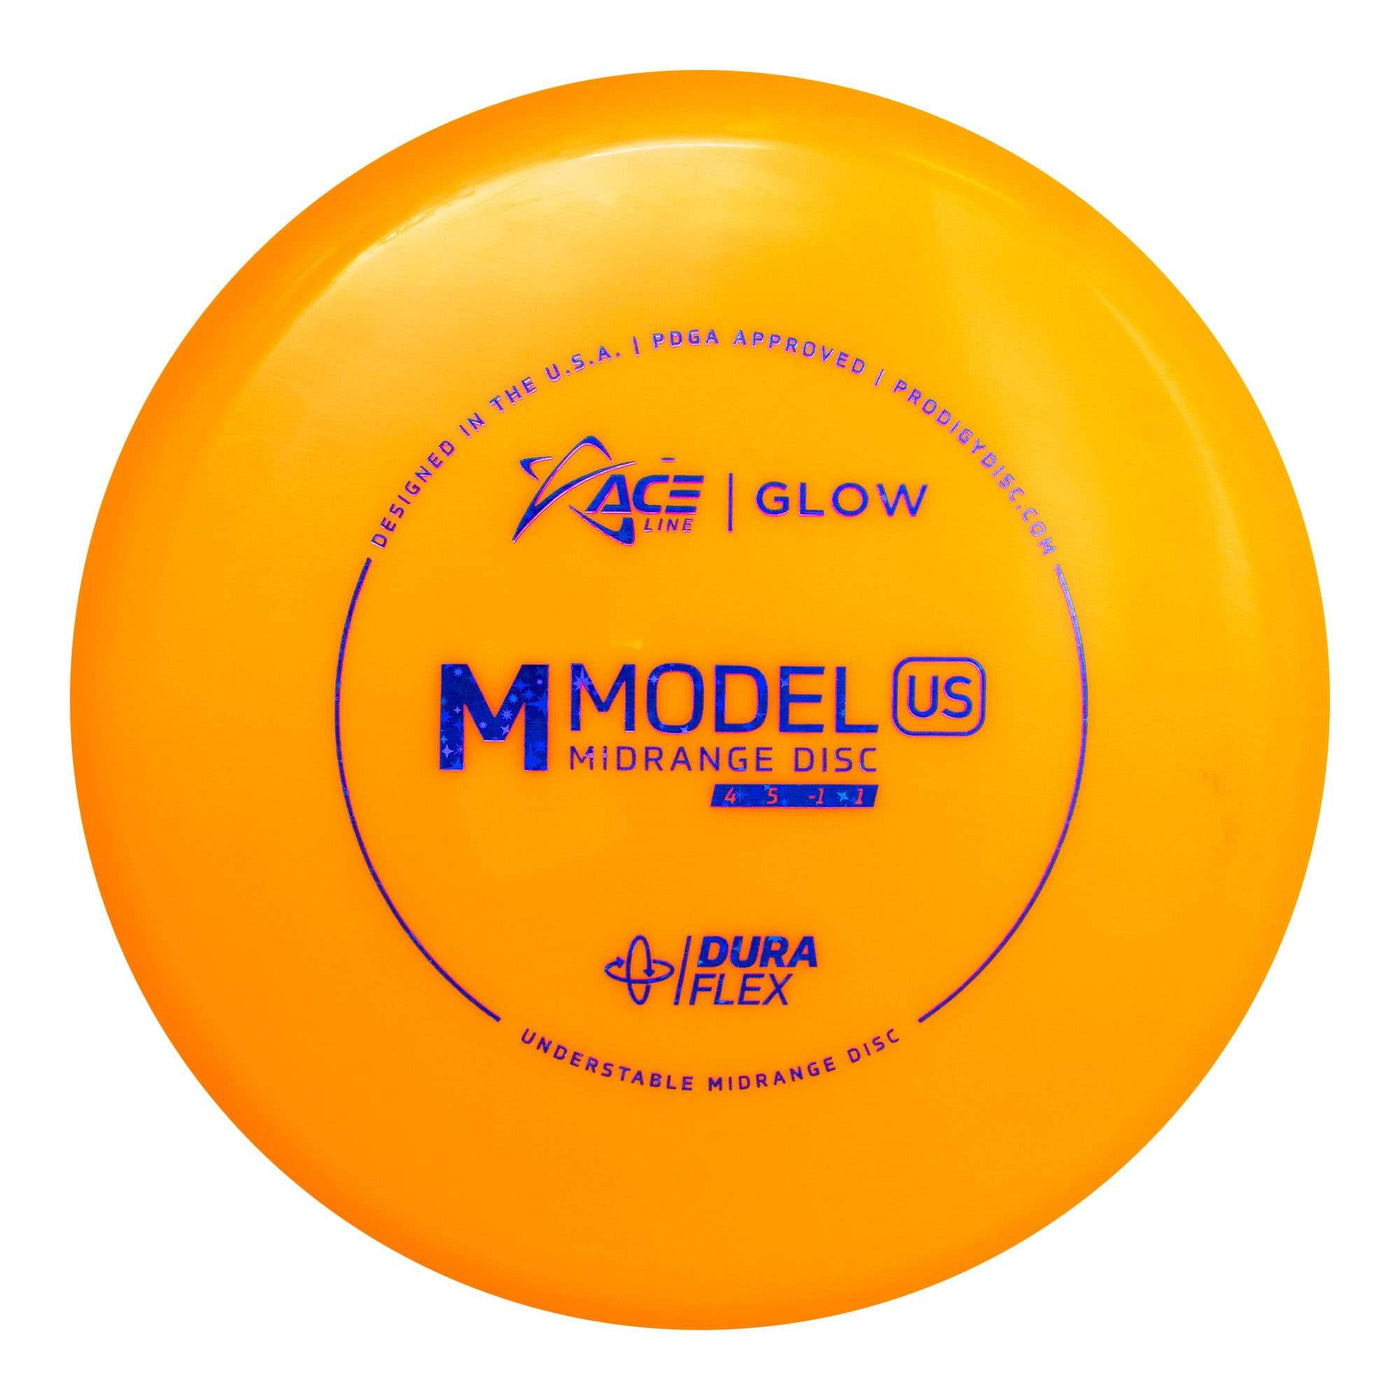 Prodigy Ace Line DuraFlex Color Glow M Model US Midrange - Speed 4